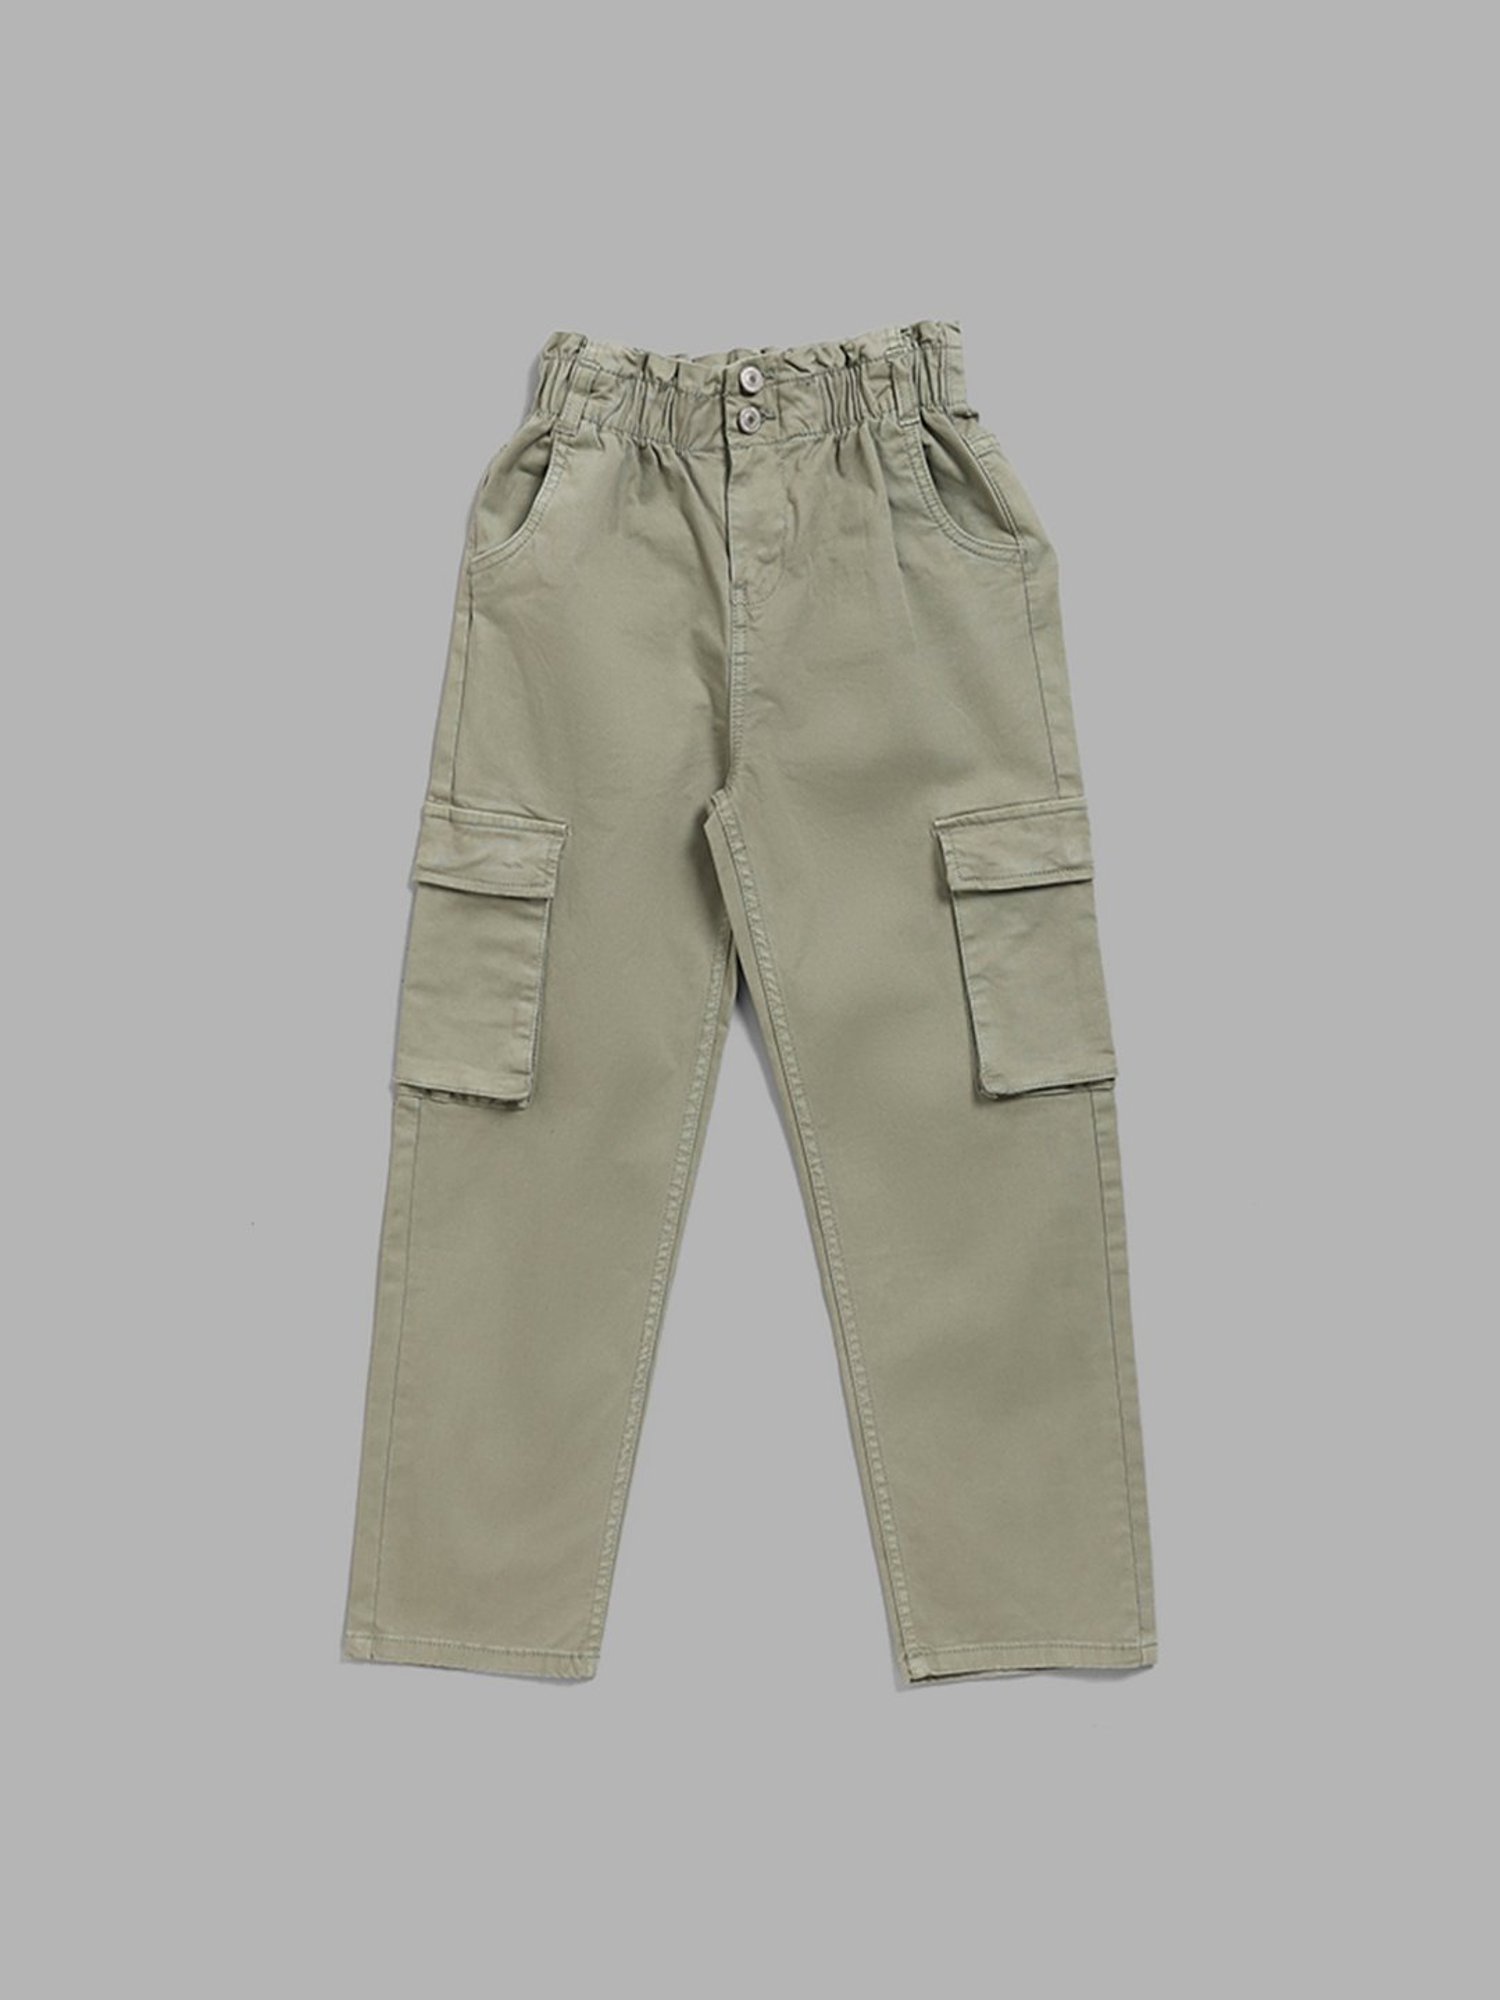 Stylish Cargo Pants | Kids Cargo | Kids Cotton cargo pants for Boys & Girls  | Kids Fashion - YouTube